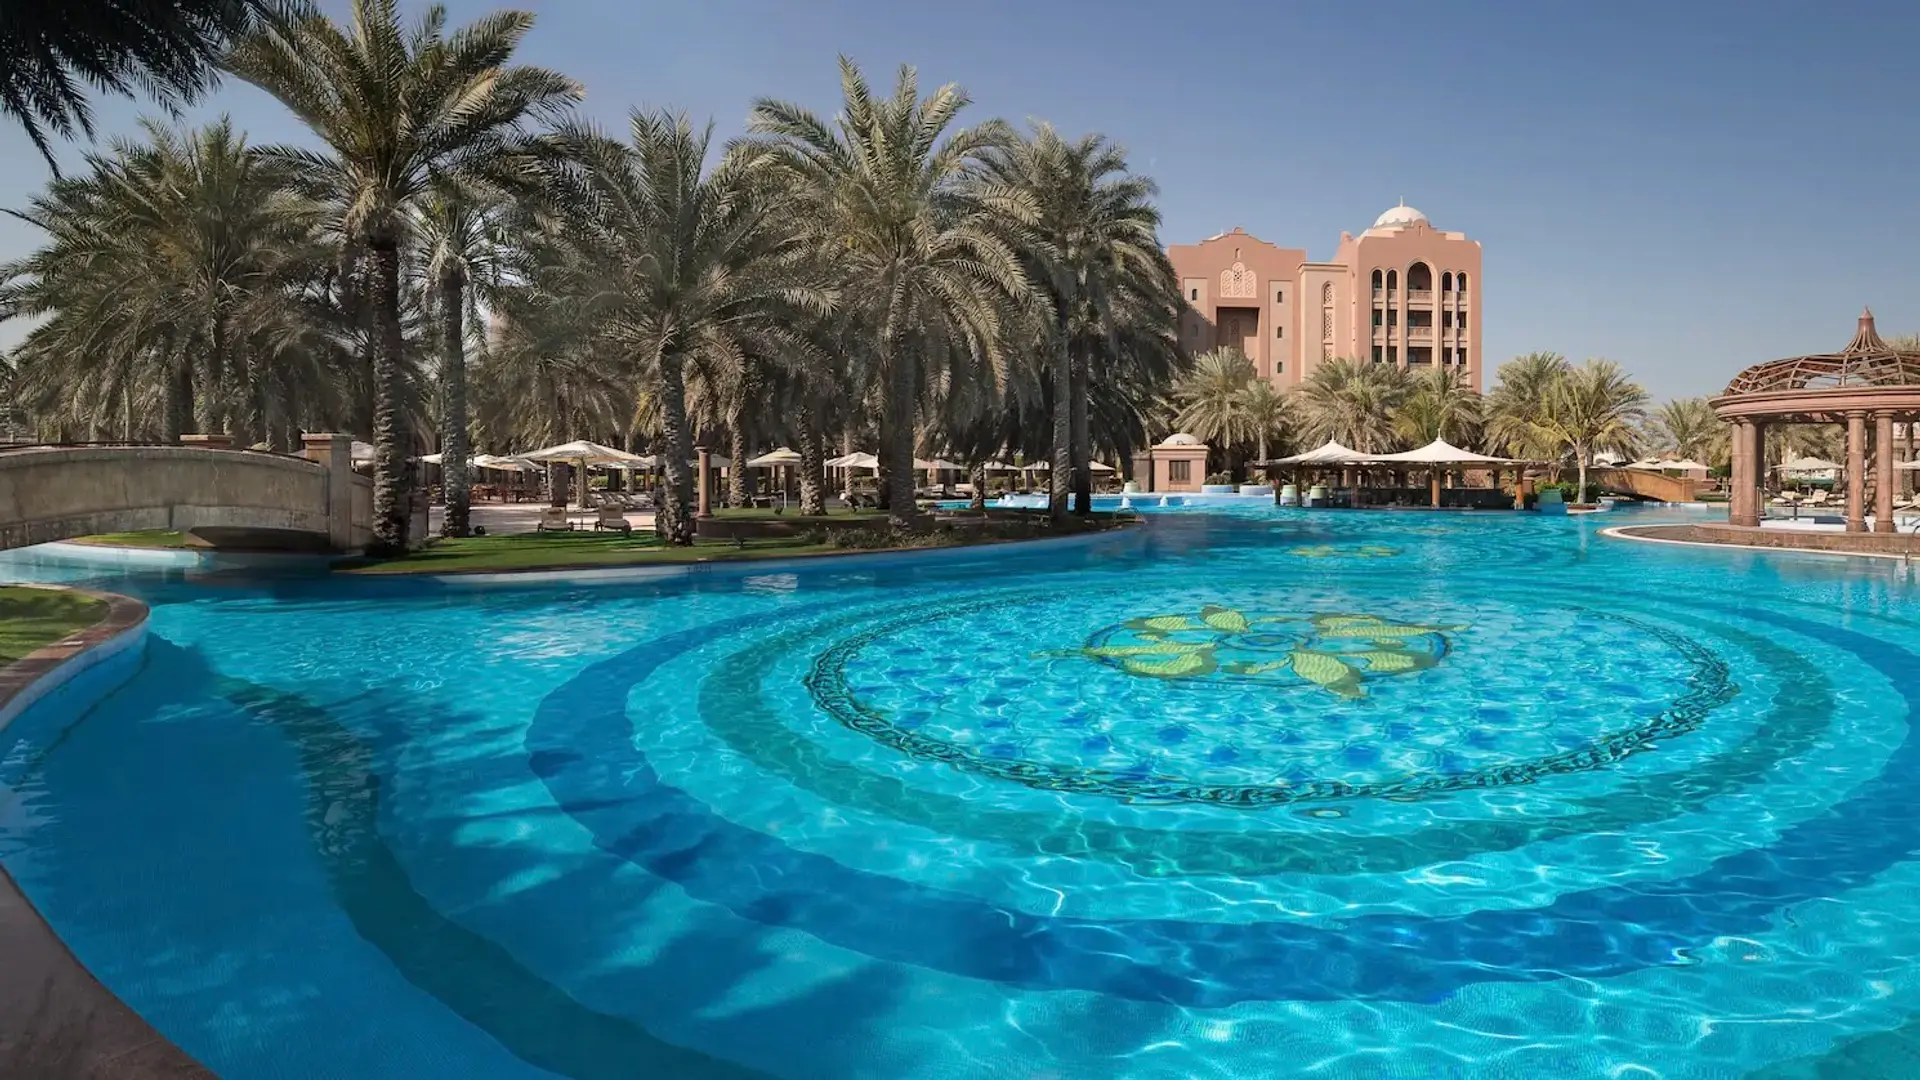 Hotel review Service & Facilities' - Emirates Palace Mandarin Oriental Abu Dhabi - 0